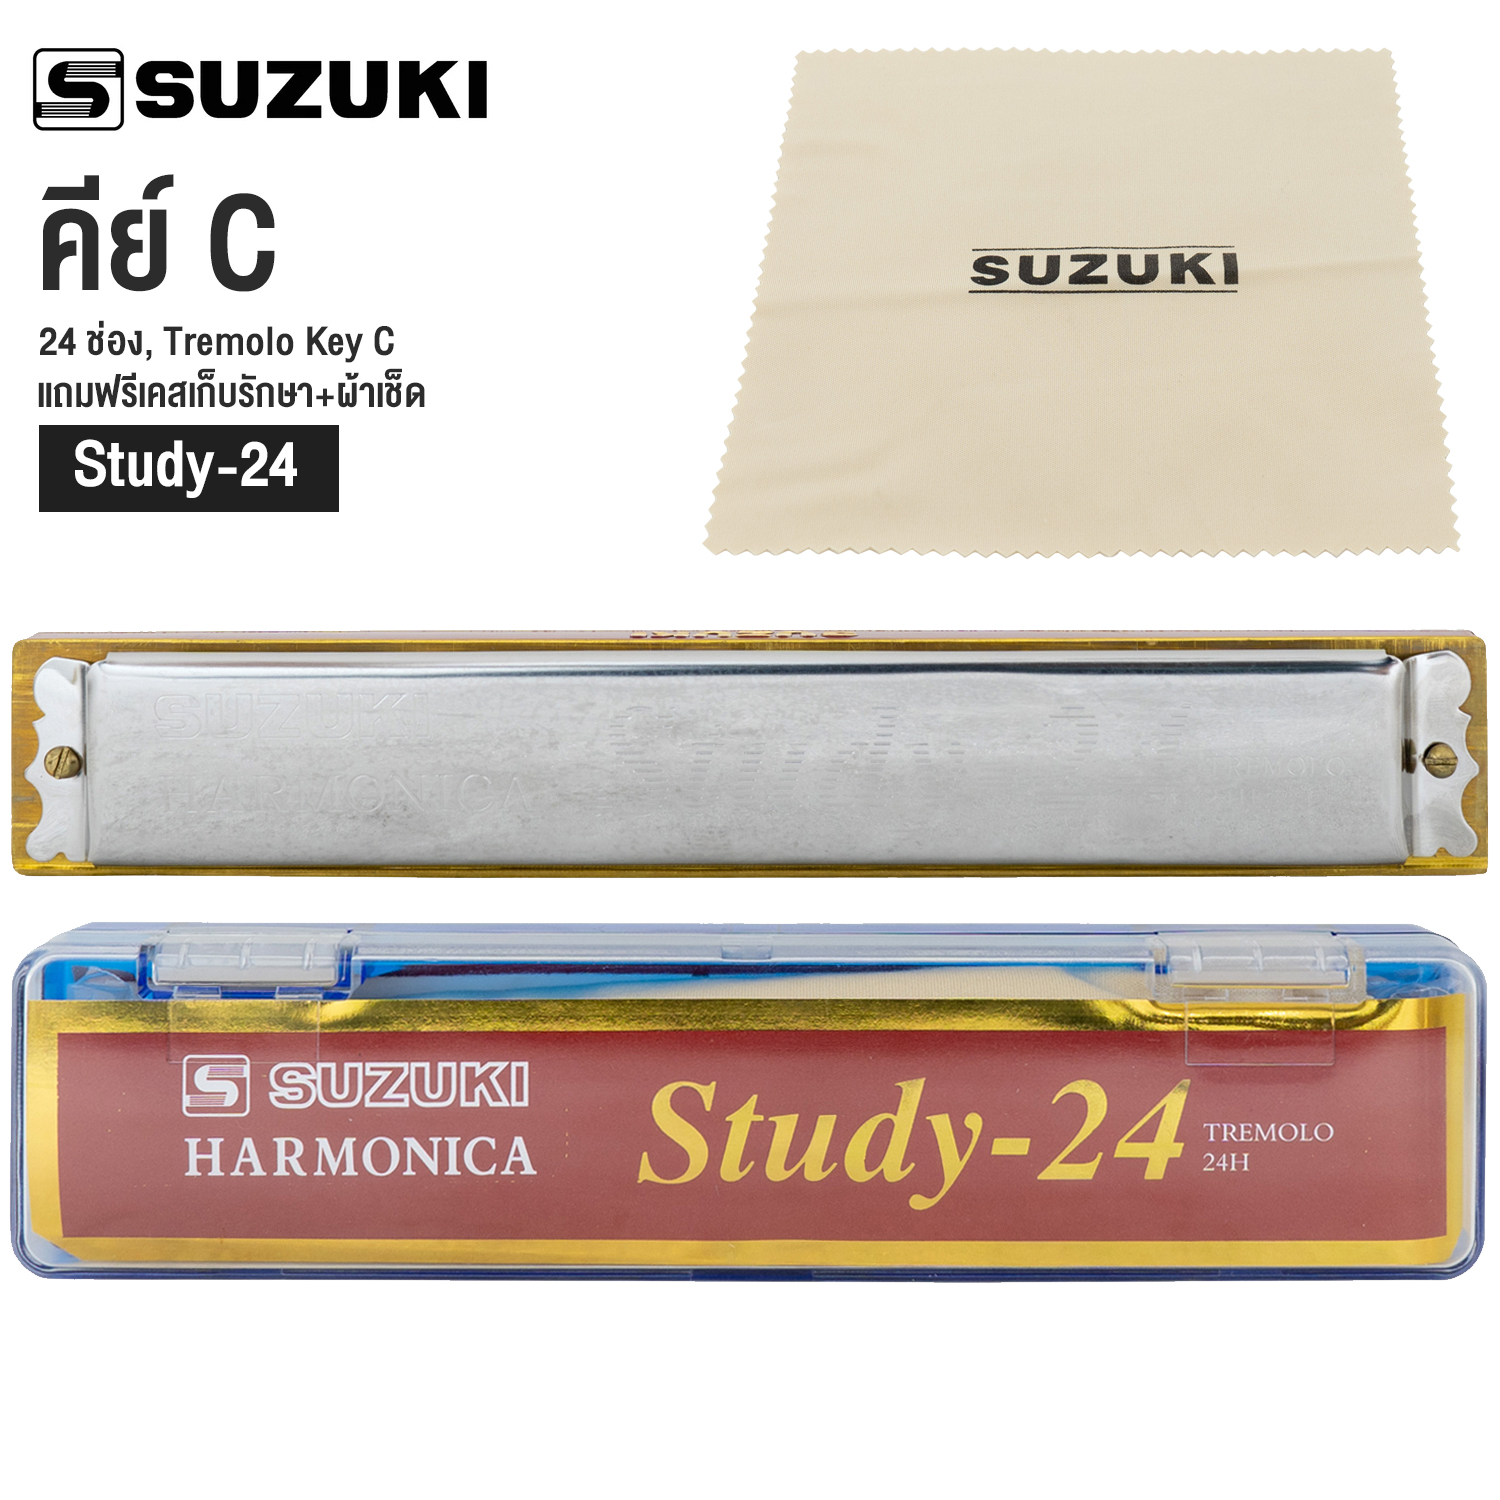 Suzuki® Study 24 Harmonica ฮาร์โมนิก้า เมาท์ออแกน Tremolo 24 ช่อง + แถมฟรีเคส & ผ้าเช็ด